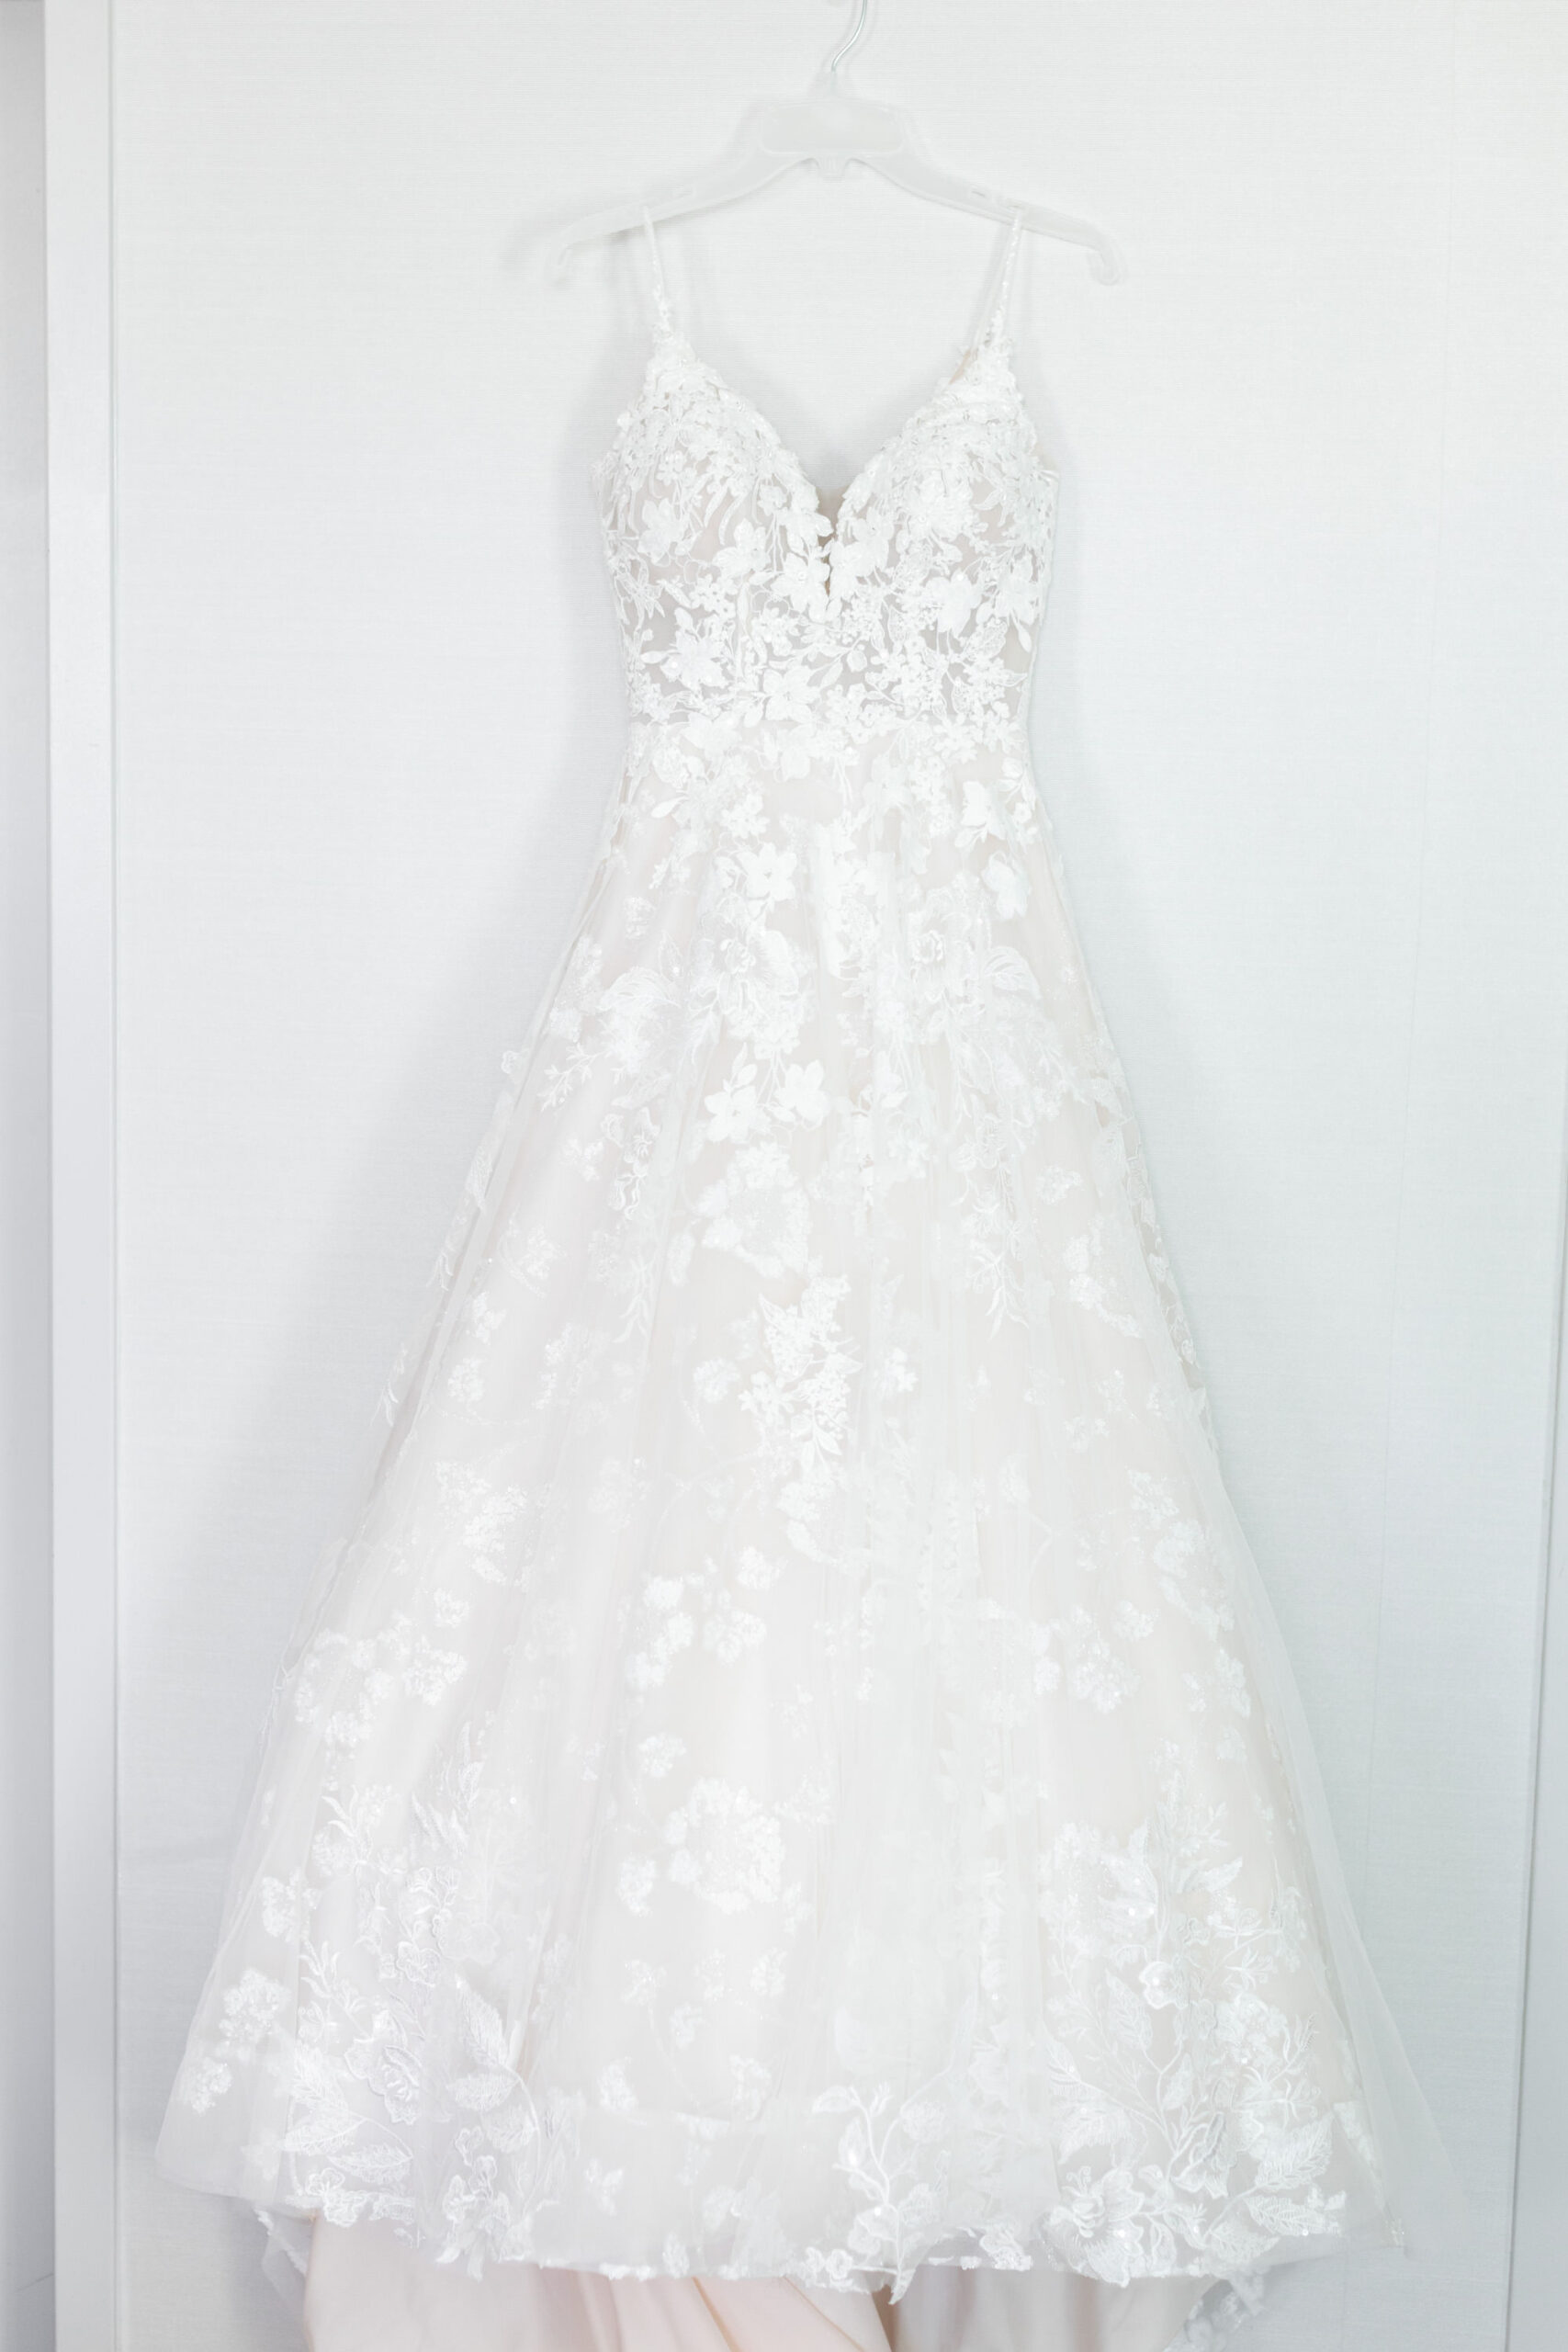 Modern Romantic Wedding, Bride Floral Applique and Illusion Ballgown Wedding Dress